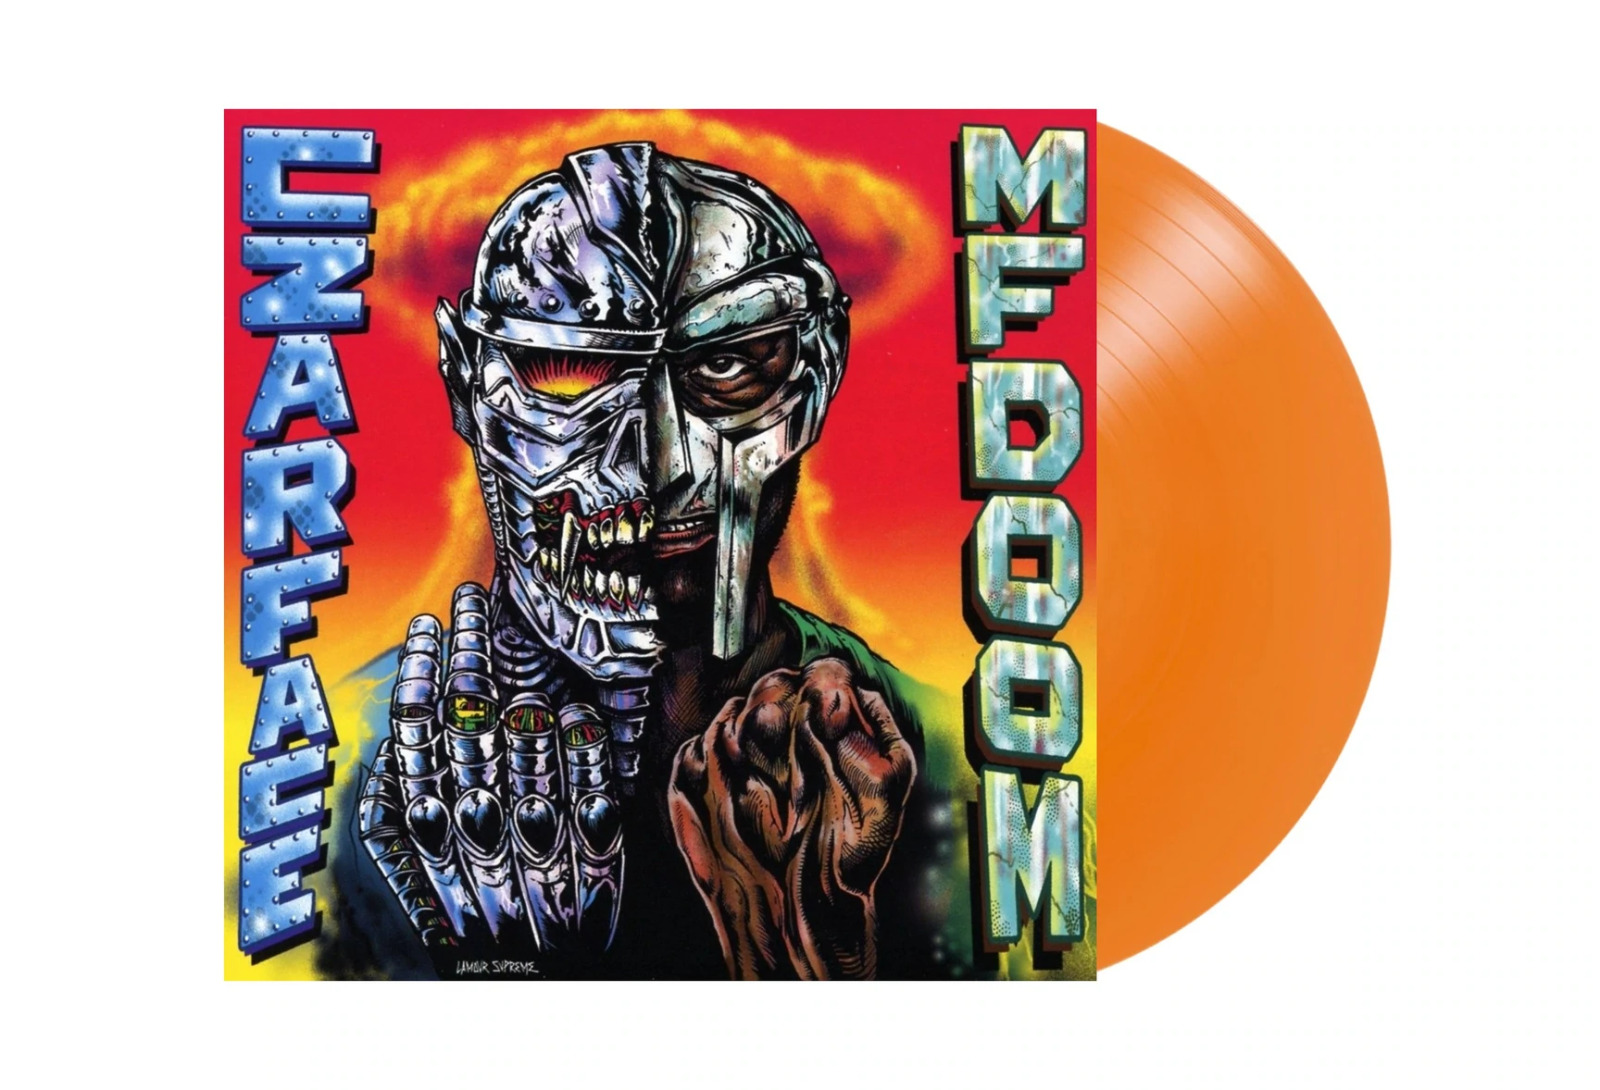 Czarface Mf Doom Meets Metal Face Exclusive Limited Edition Orange Colored Vinyl